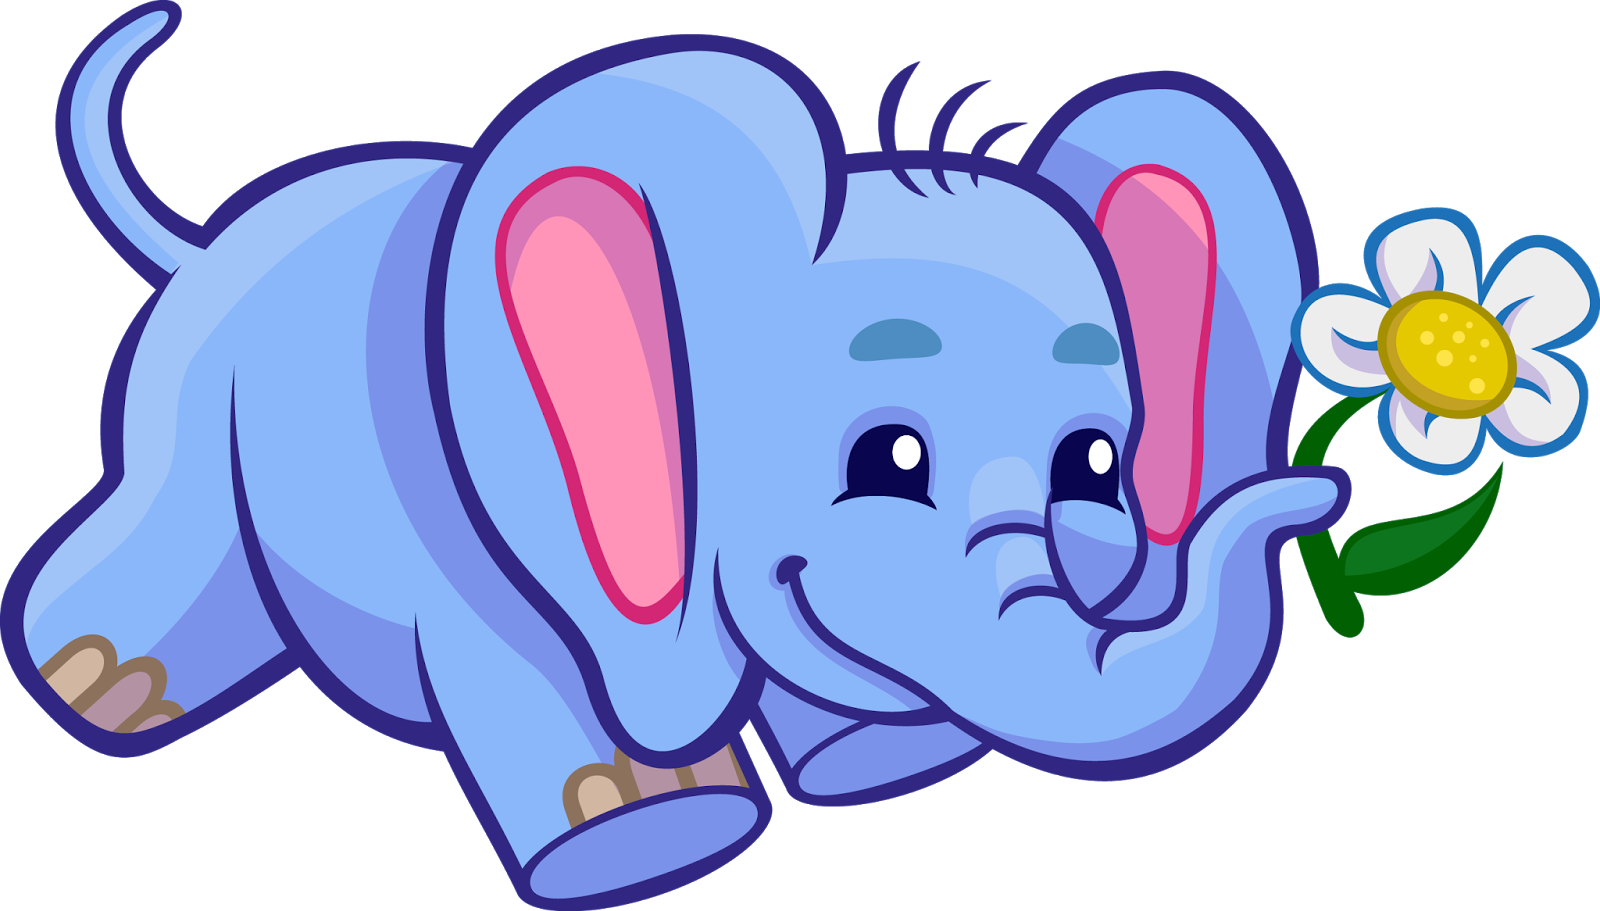 Elephant Clip art - elephants clipart png download - 1600*911 - Free